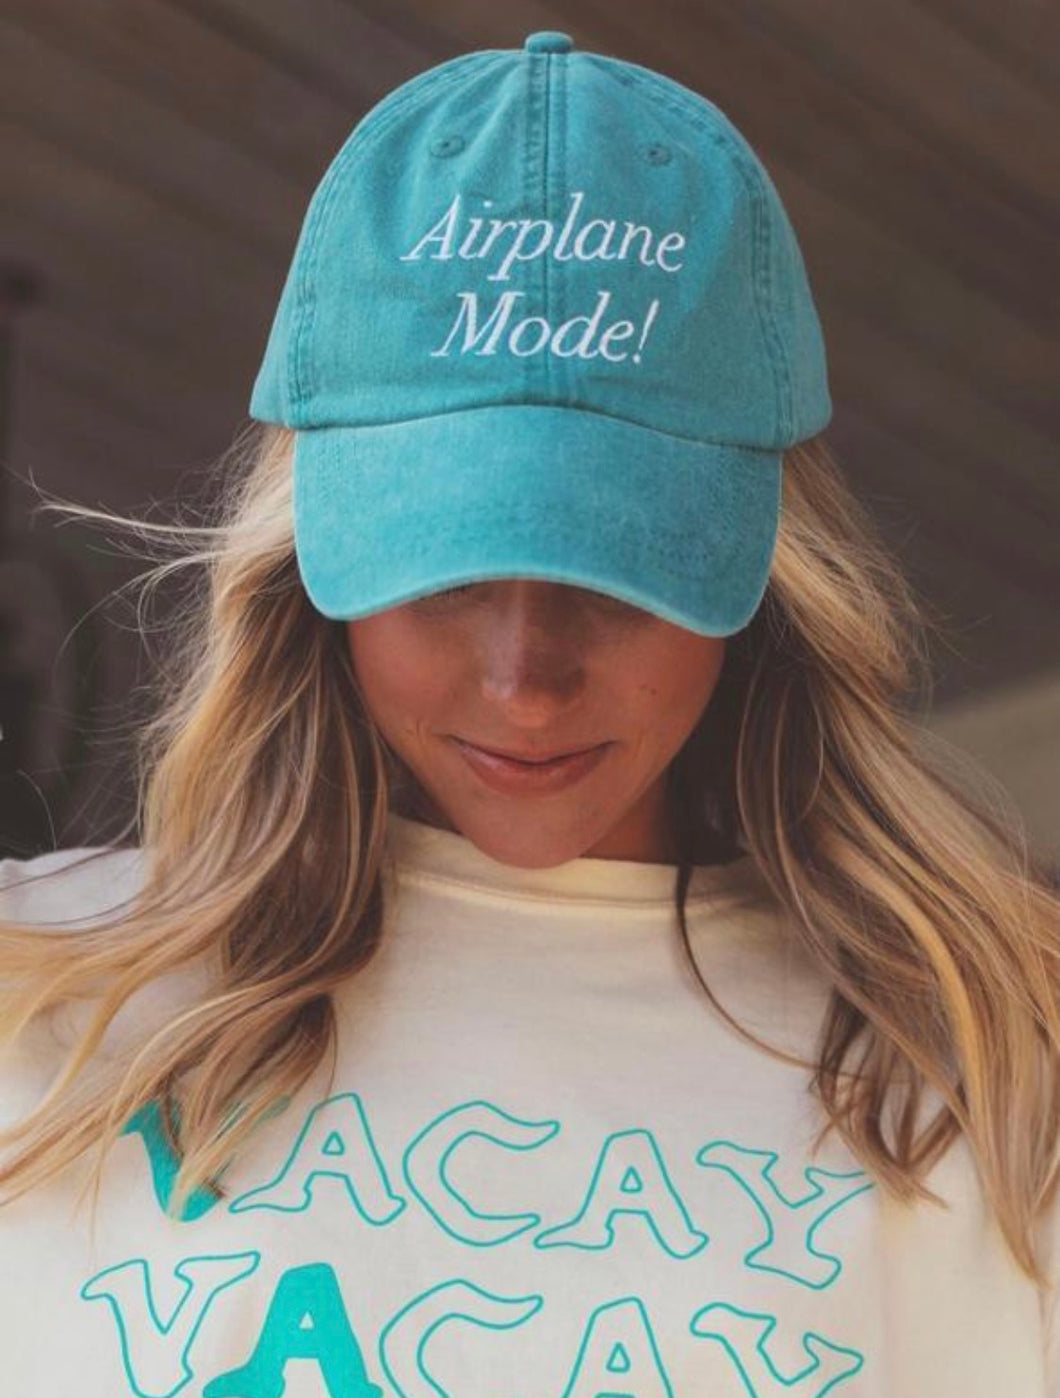 Airplane mode hat